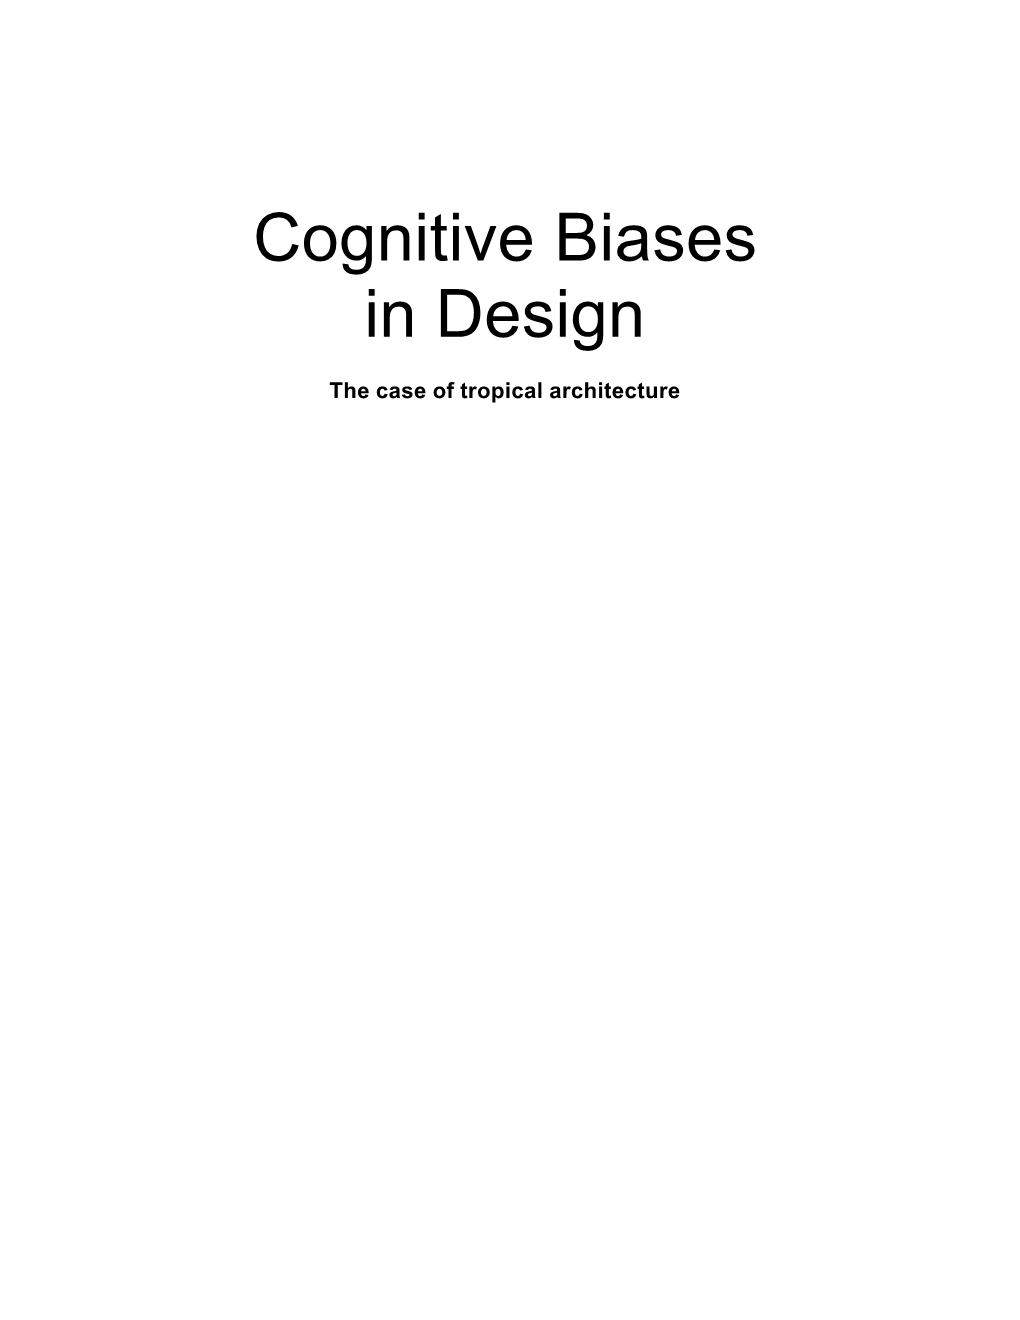 Cognitive Biases in Design